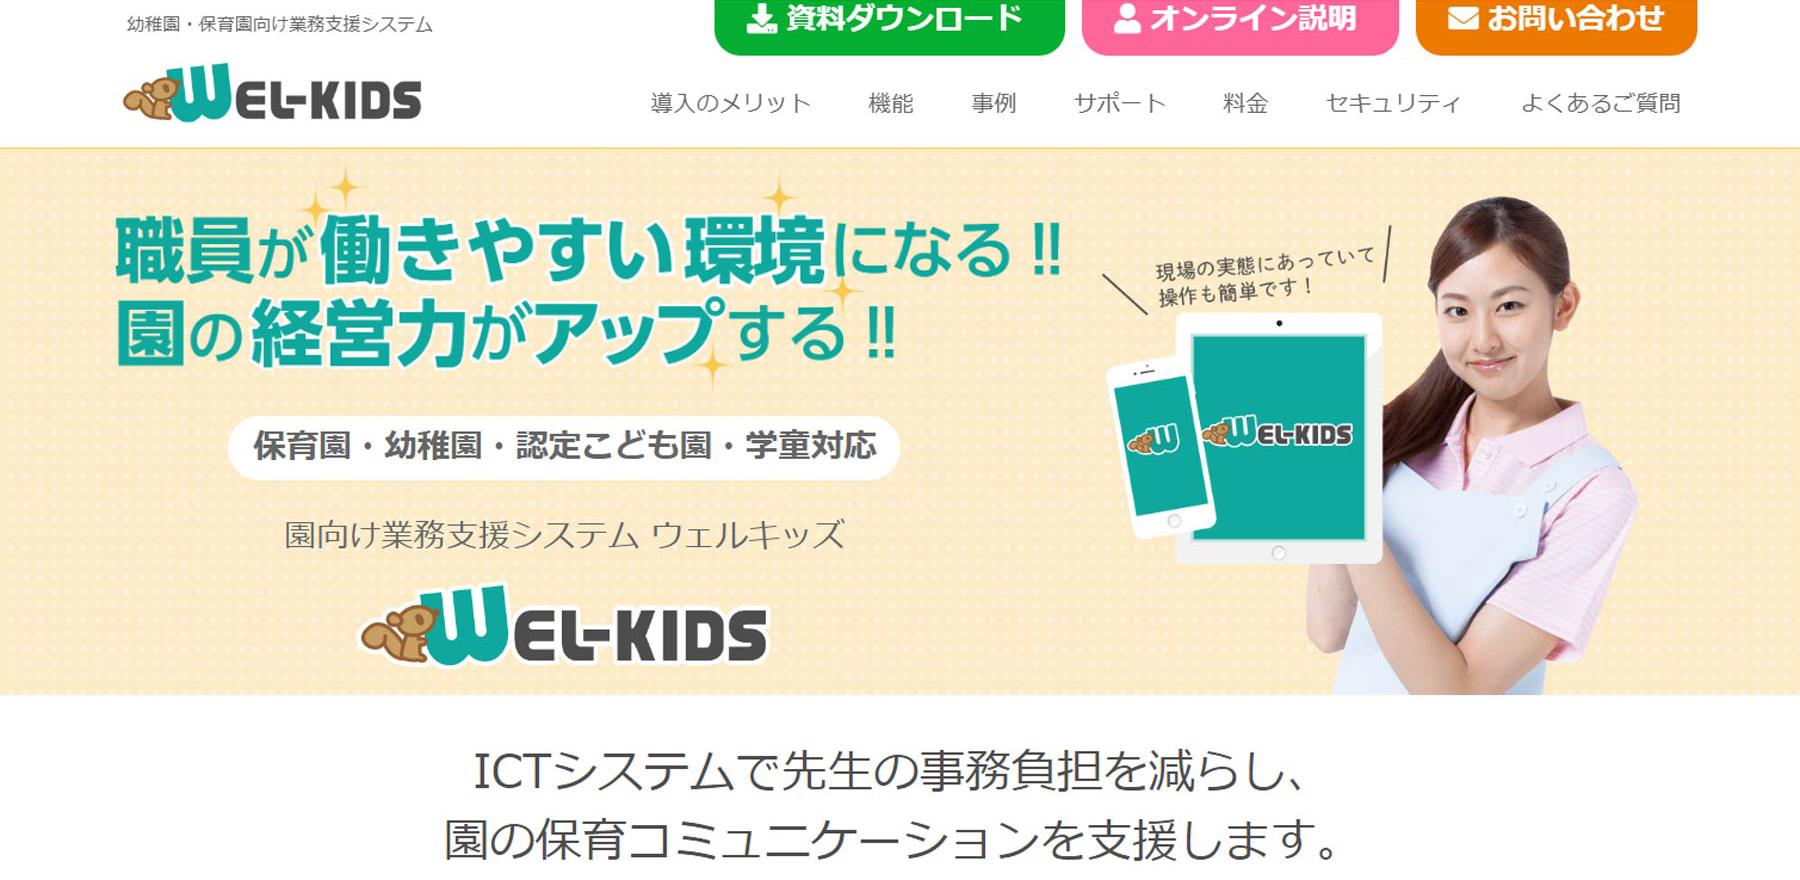 WEL-KIDS公式Webサイト